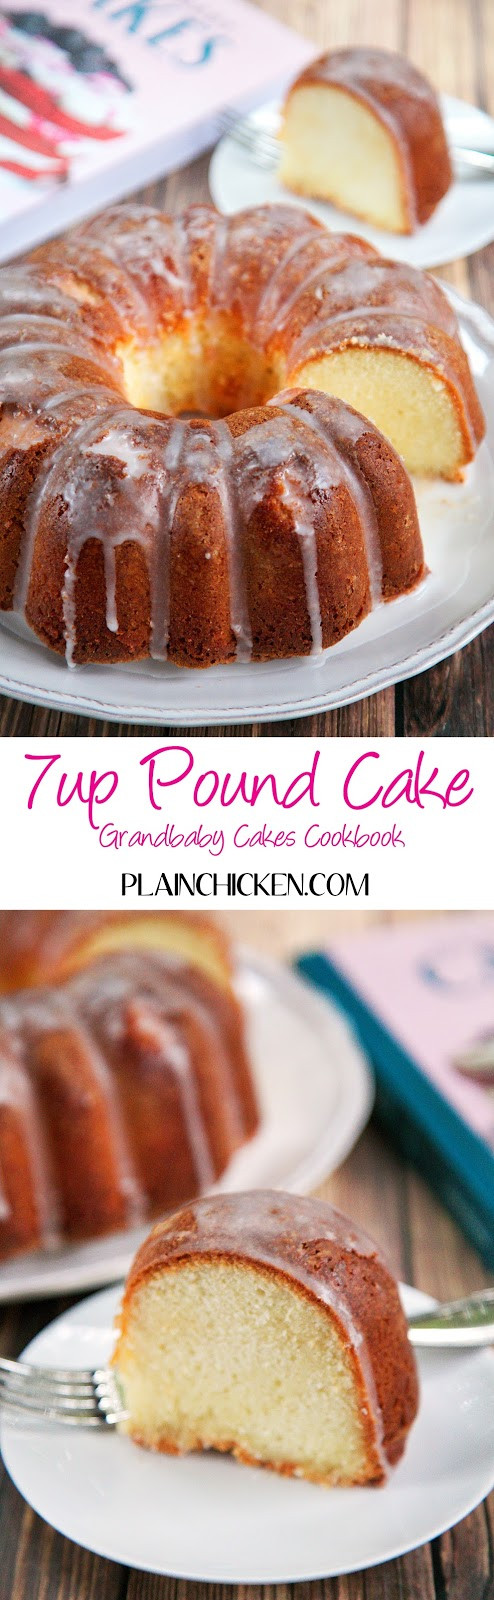 7Up Pound Cake Recipe
 Mama s 7up Pound Cake Grandbaby Cakes Giveaway